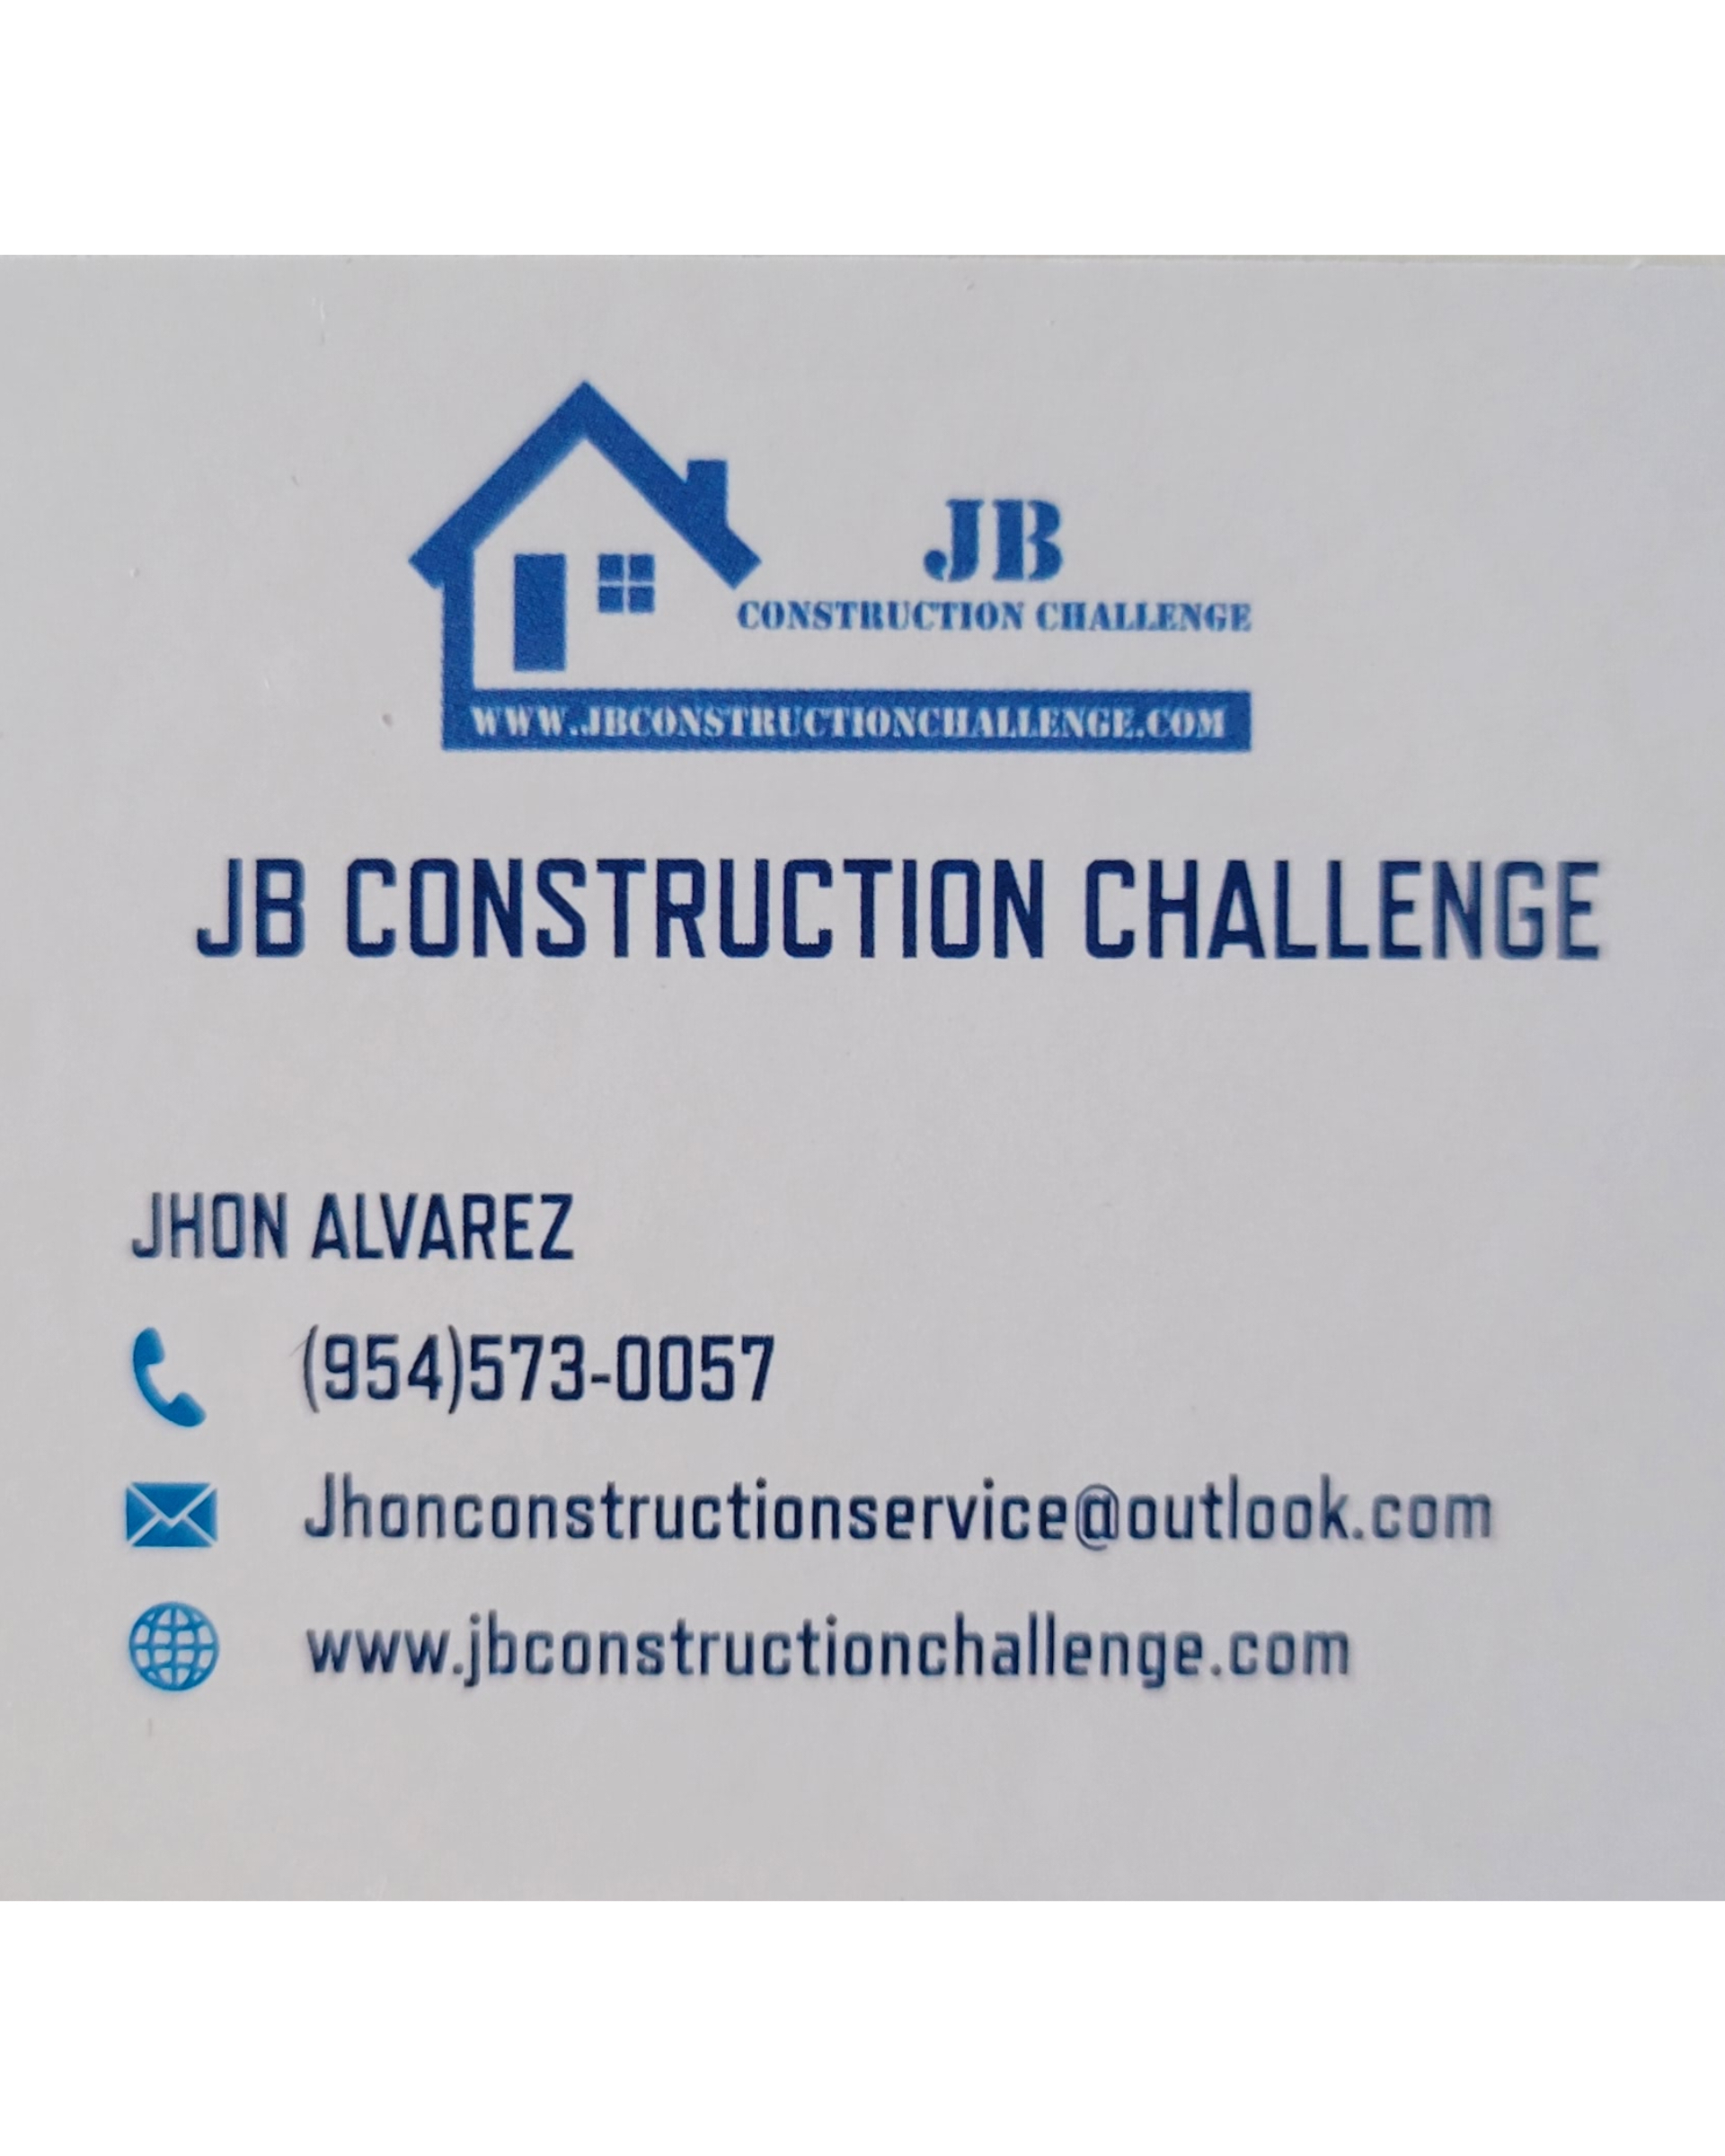 JB Construction Challenge Logo